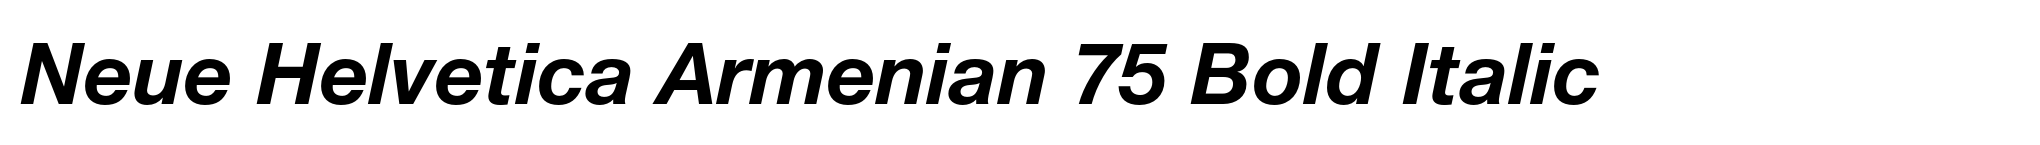 Neue Helvetica Armenian 75 Bold Italic image